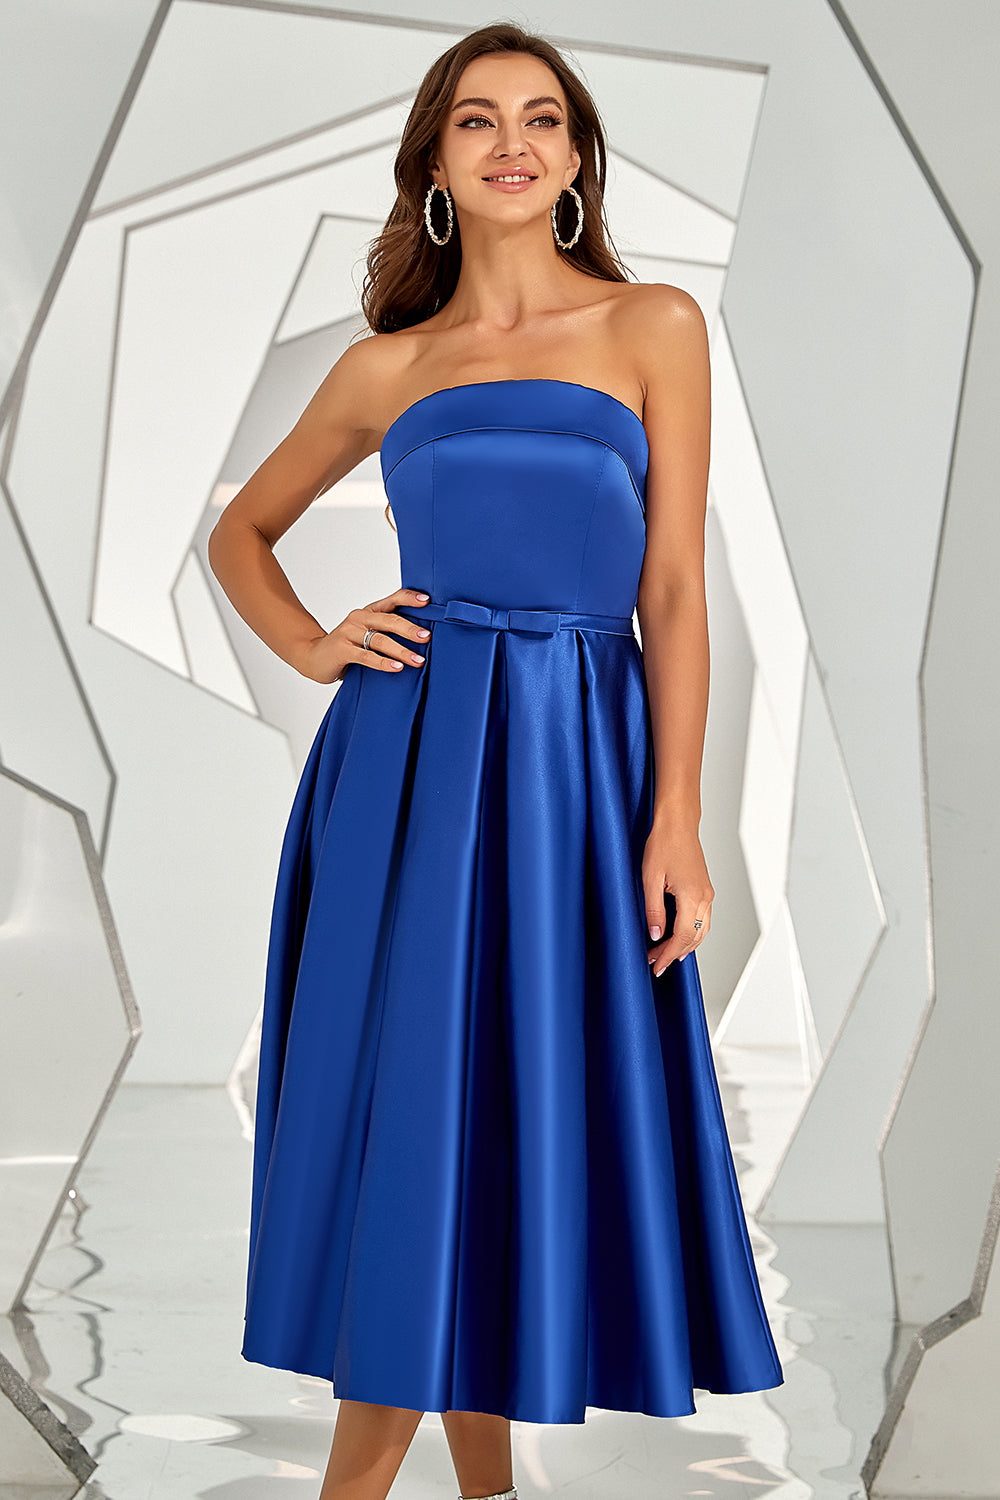 Royal Blue Strapless Homecoming Dress